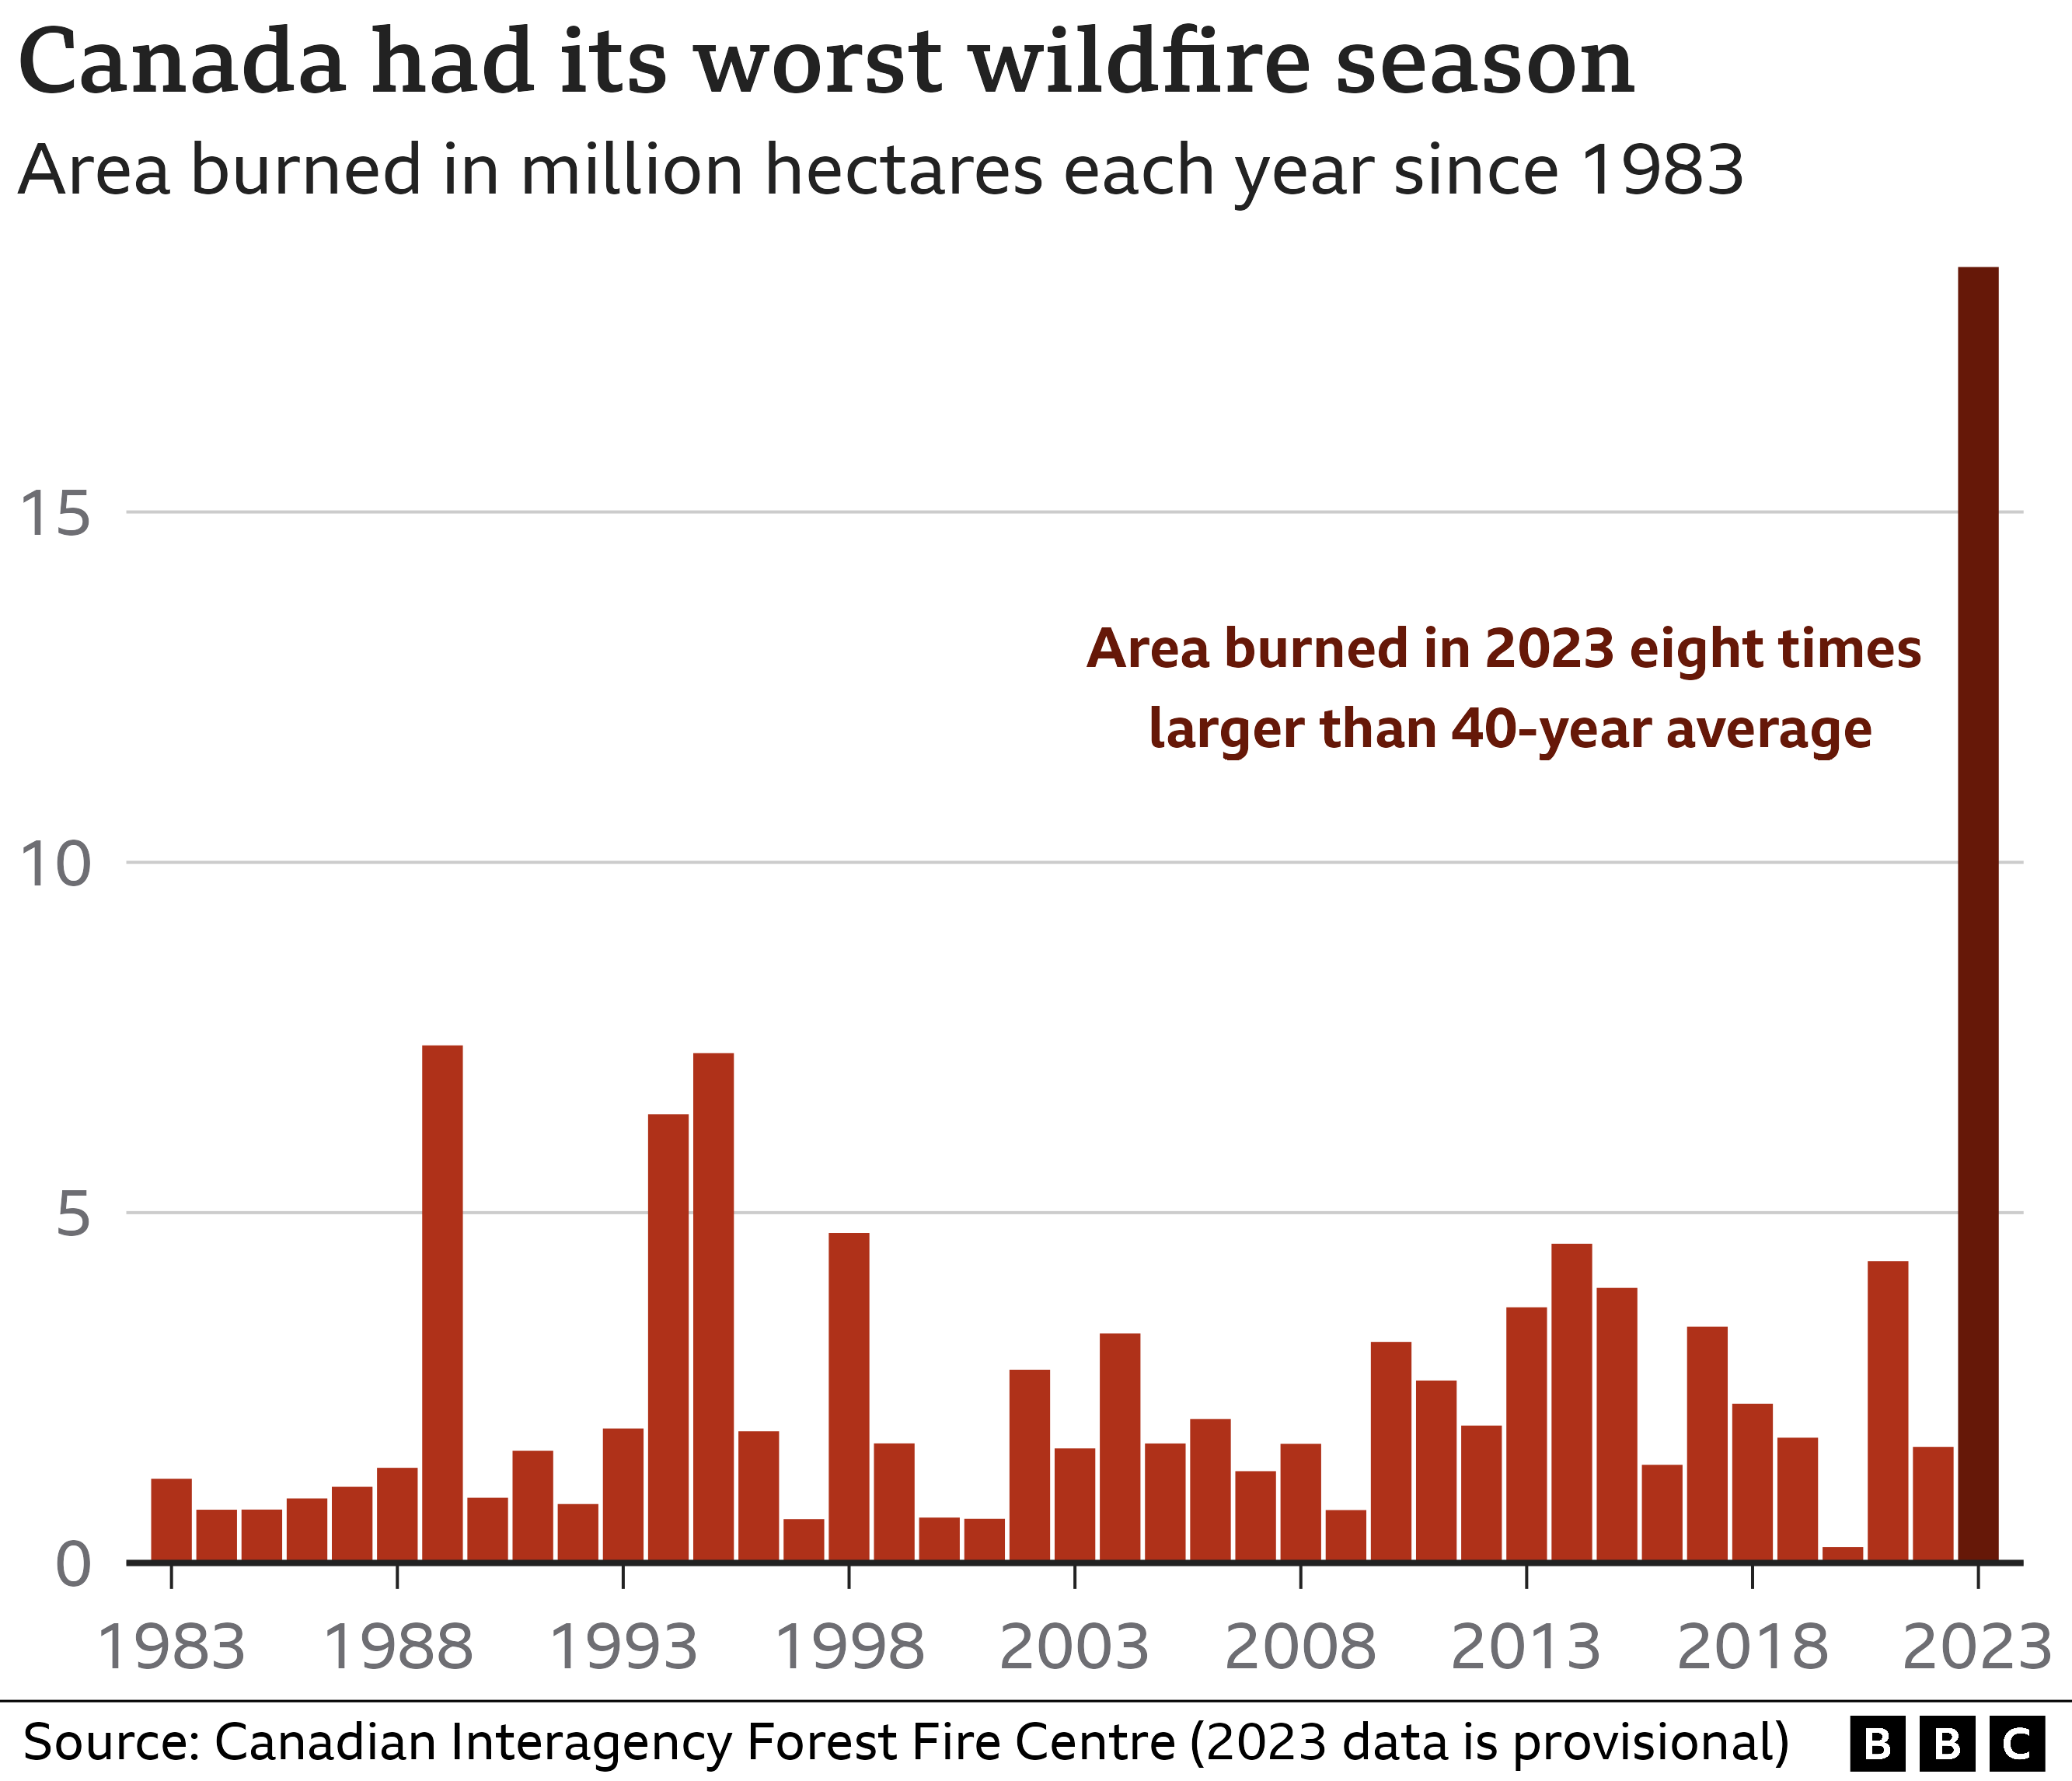 Canada's worst wildfire season